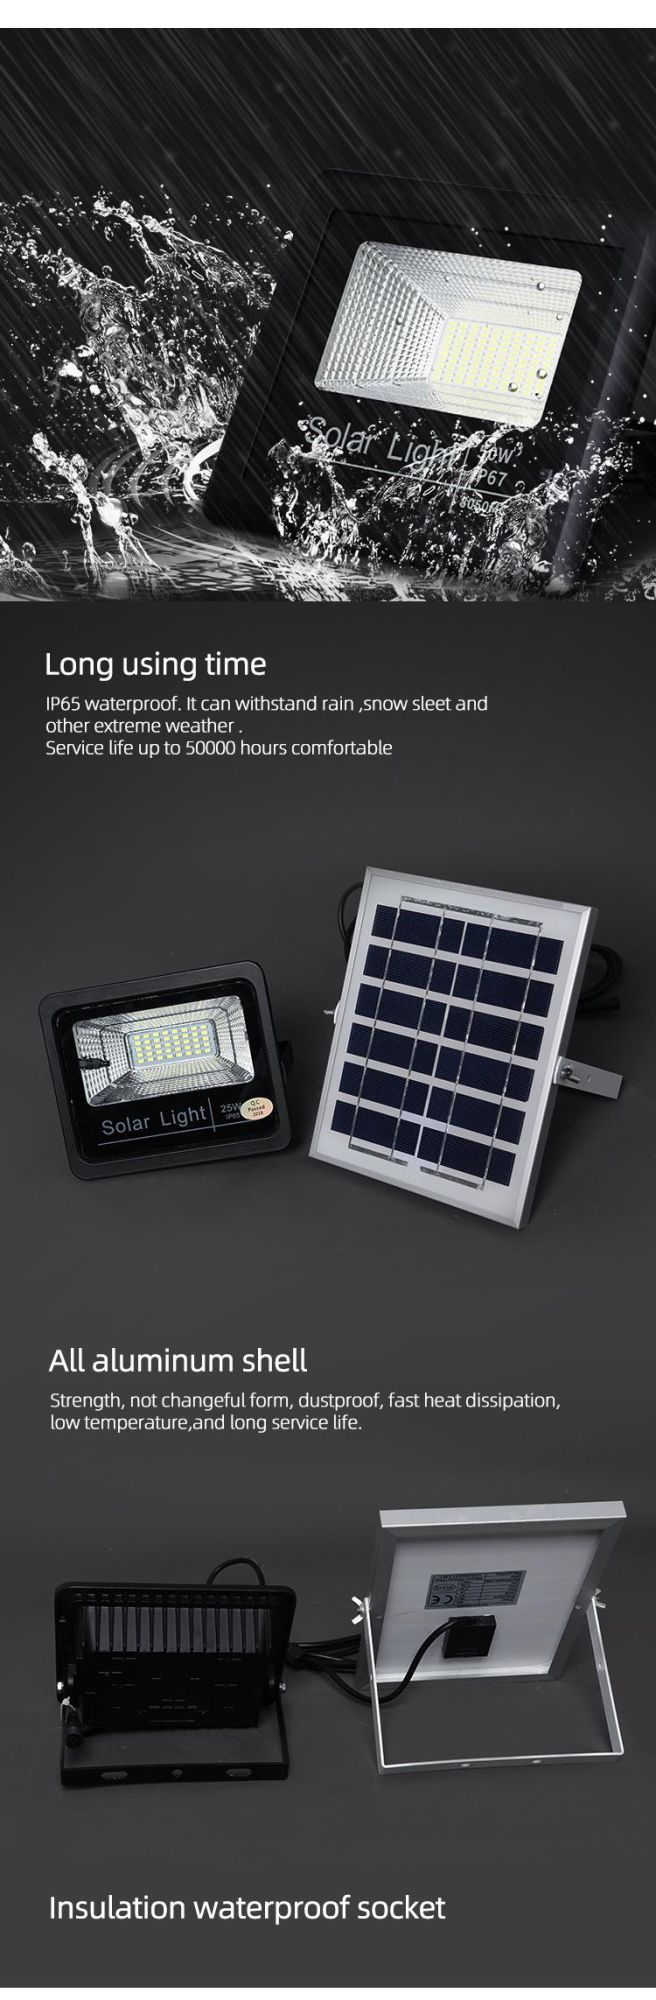 Bspro High Quality Competitive Price Solar Flood Light Energy Saving LED Solar Panel Flood Light